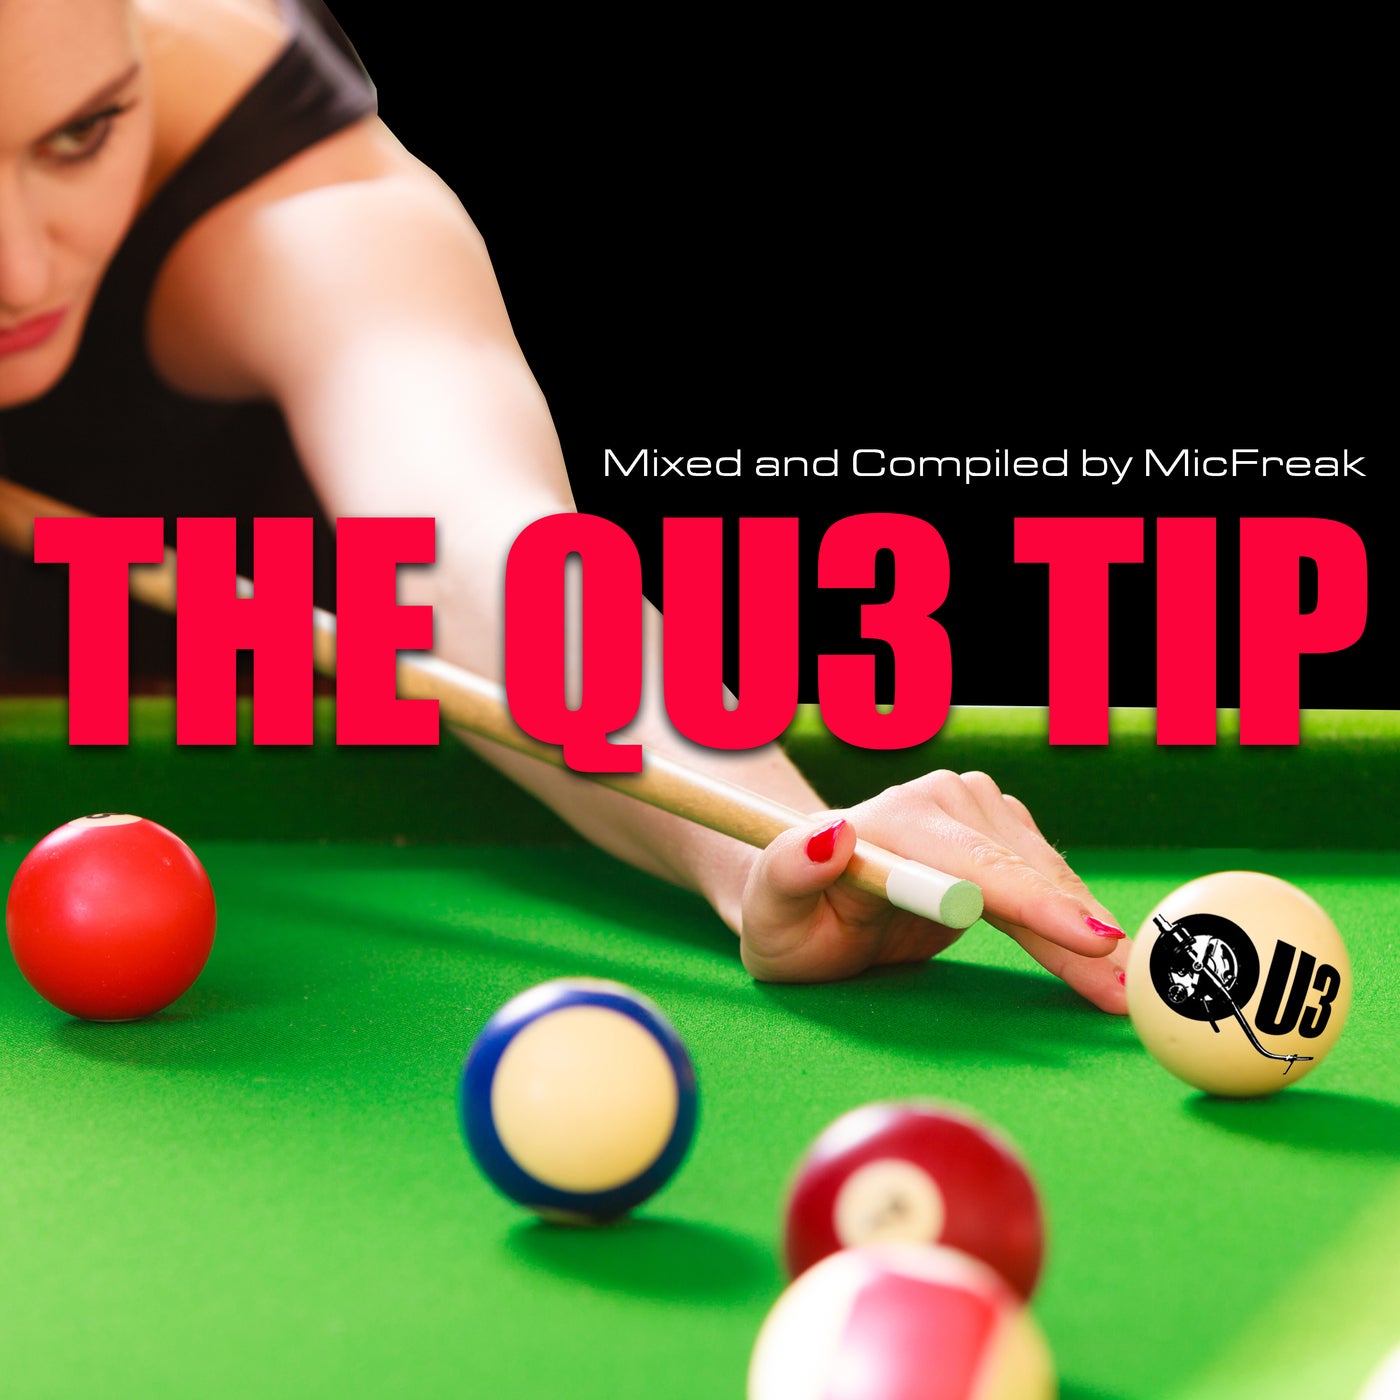 The QU3 Tip